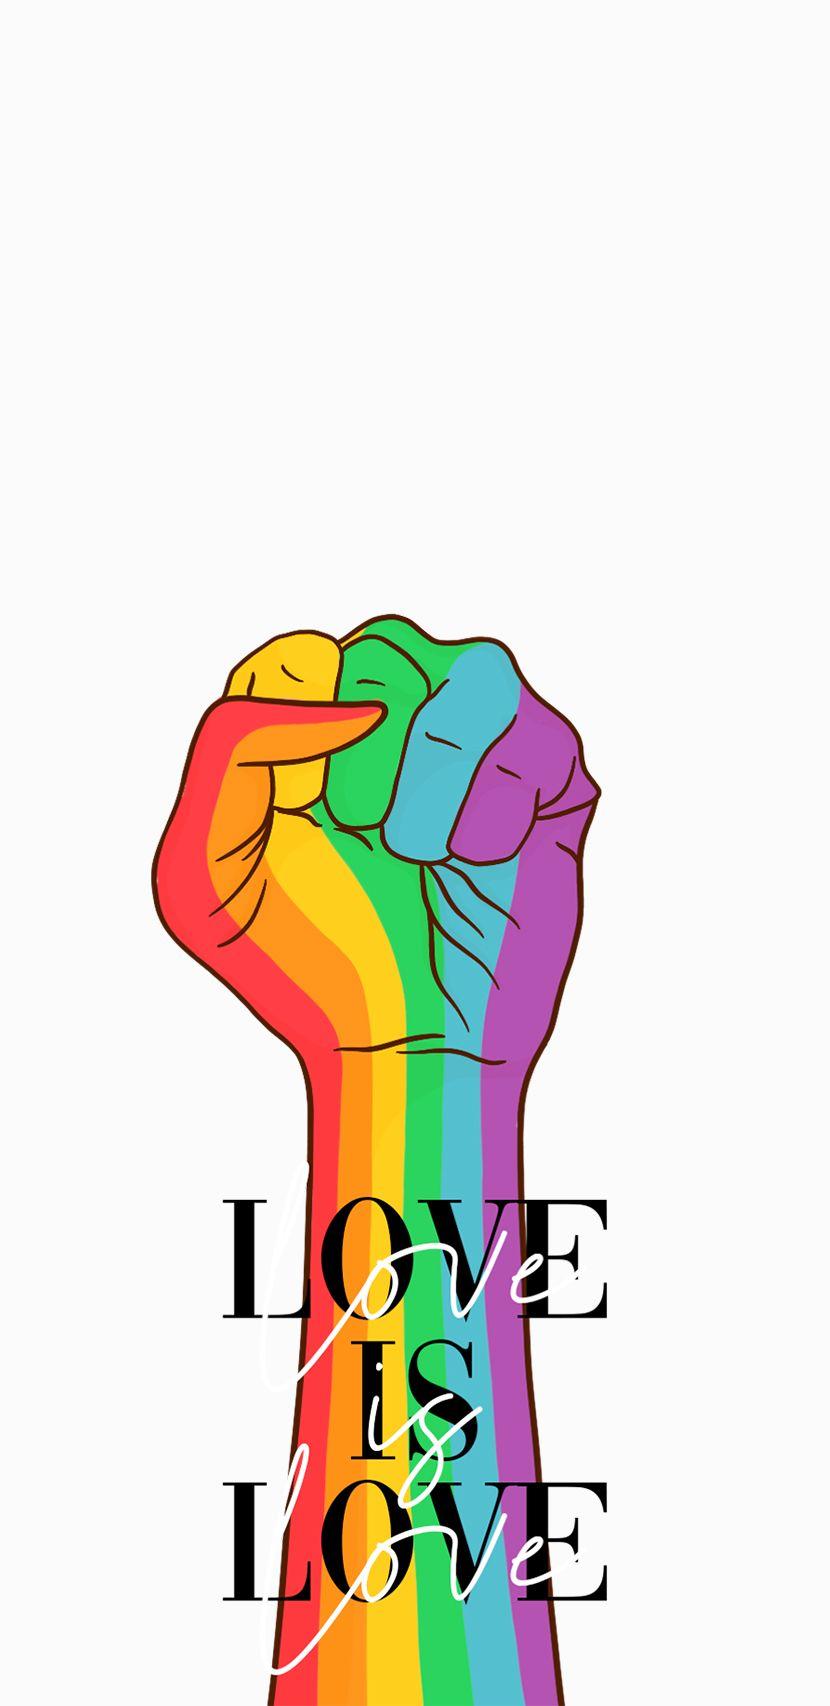 GOCASE loves Pride ideas. iphone wallpaper, iphone background, screen savers